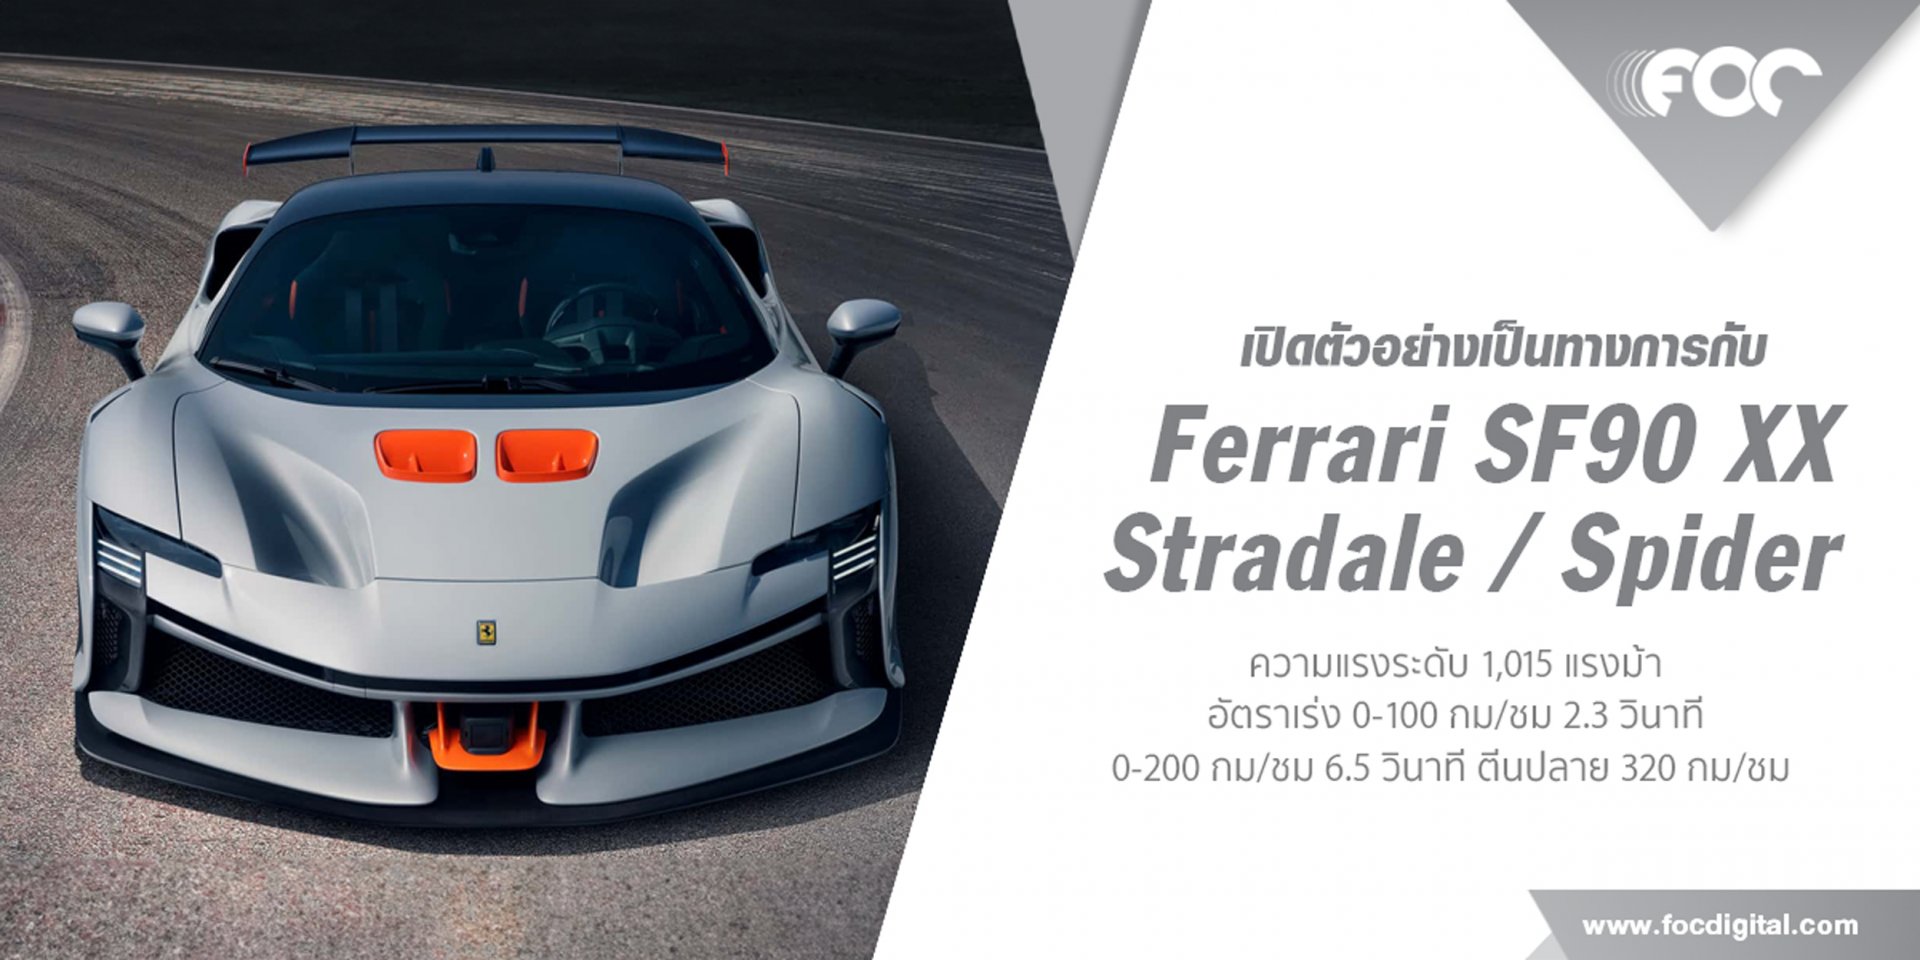 Ferrari เปิดตัว SF90 XX Stradale / Spider ที่สุดของม้าลำพองความแรงระดับ 1,015 แรงม้า!